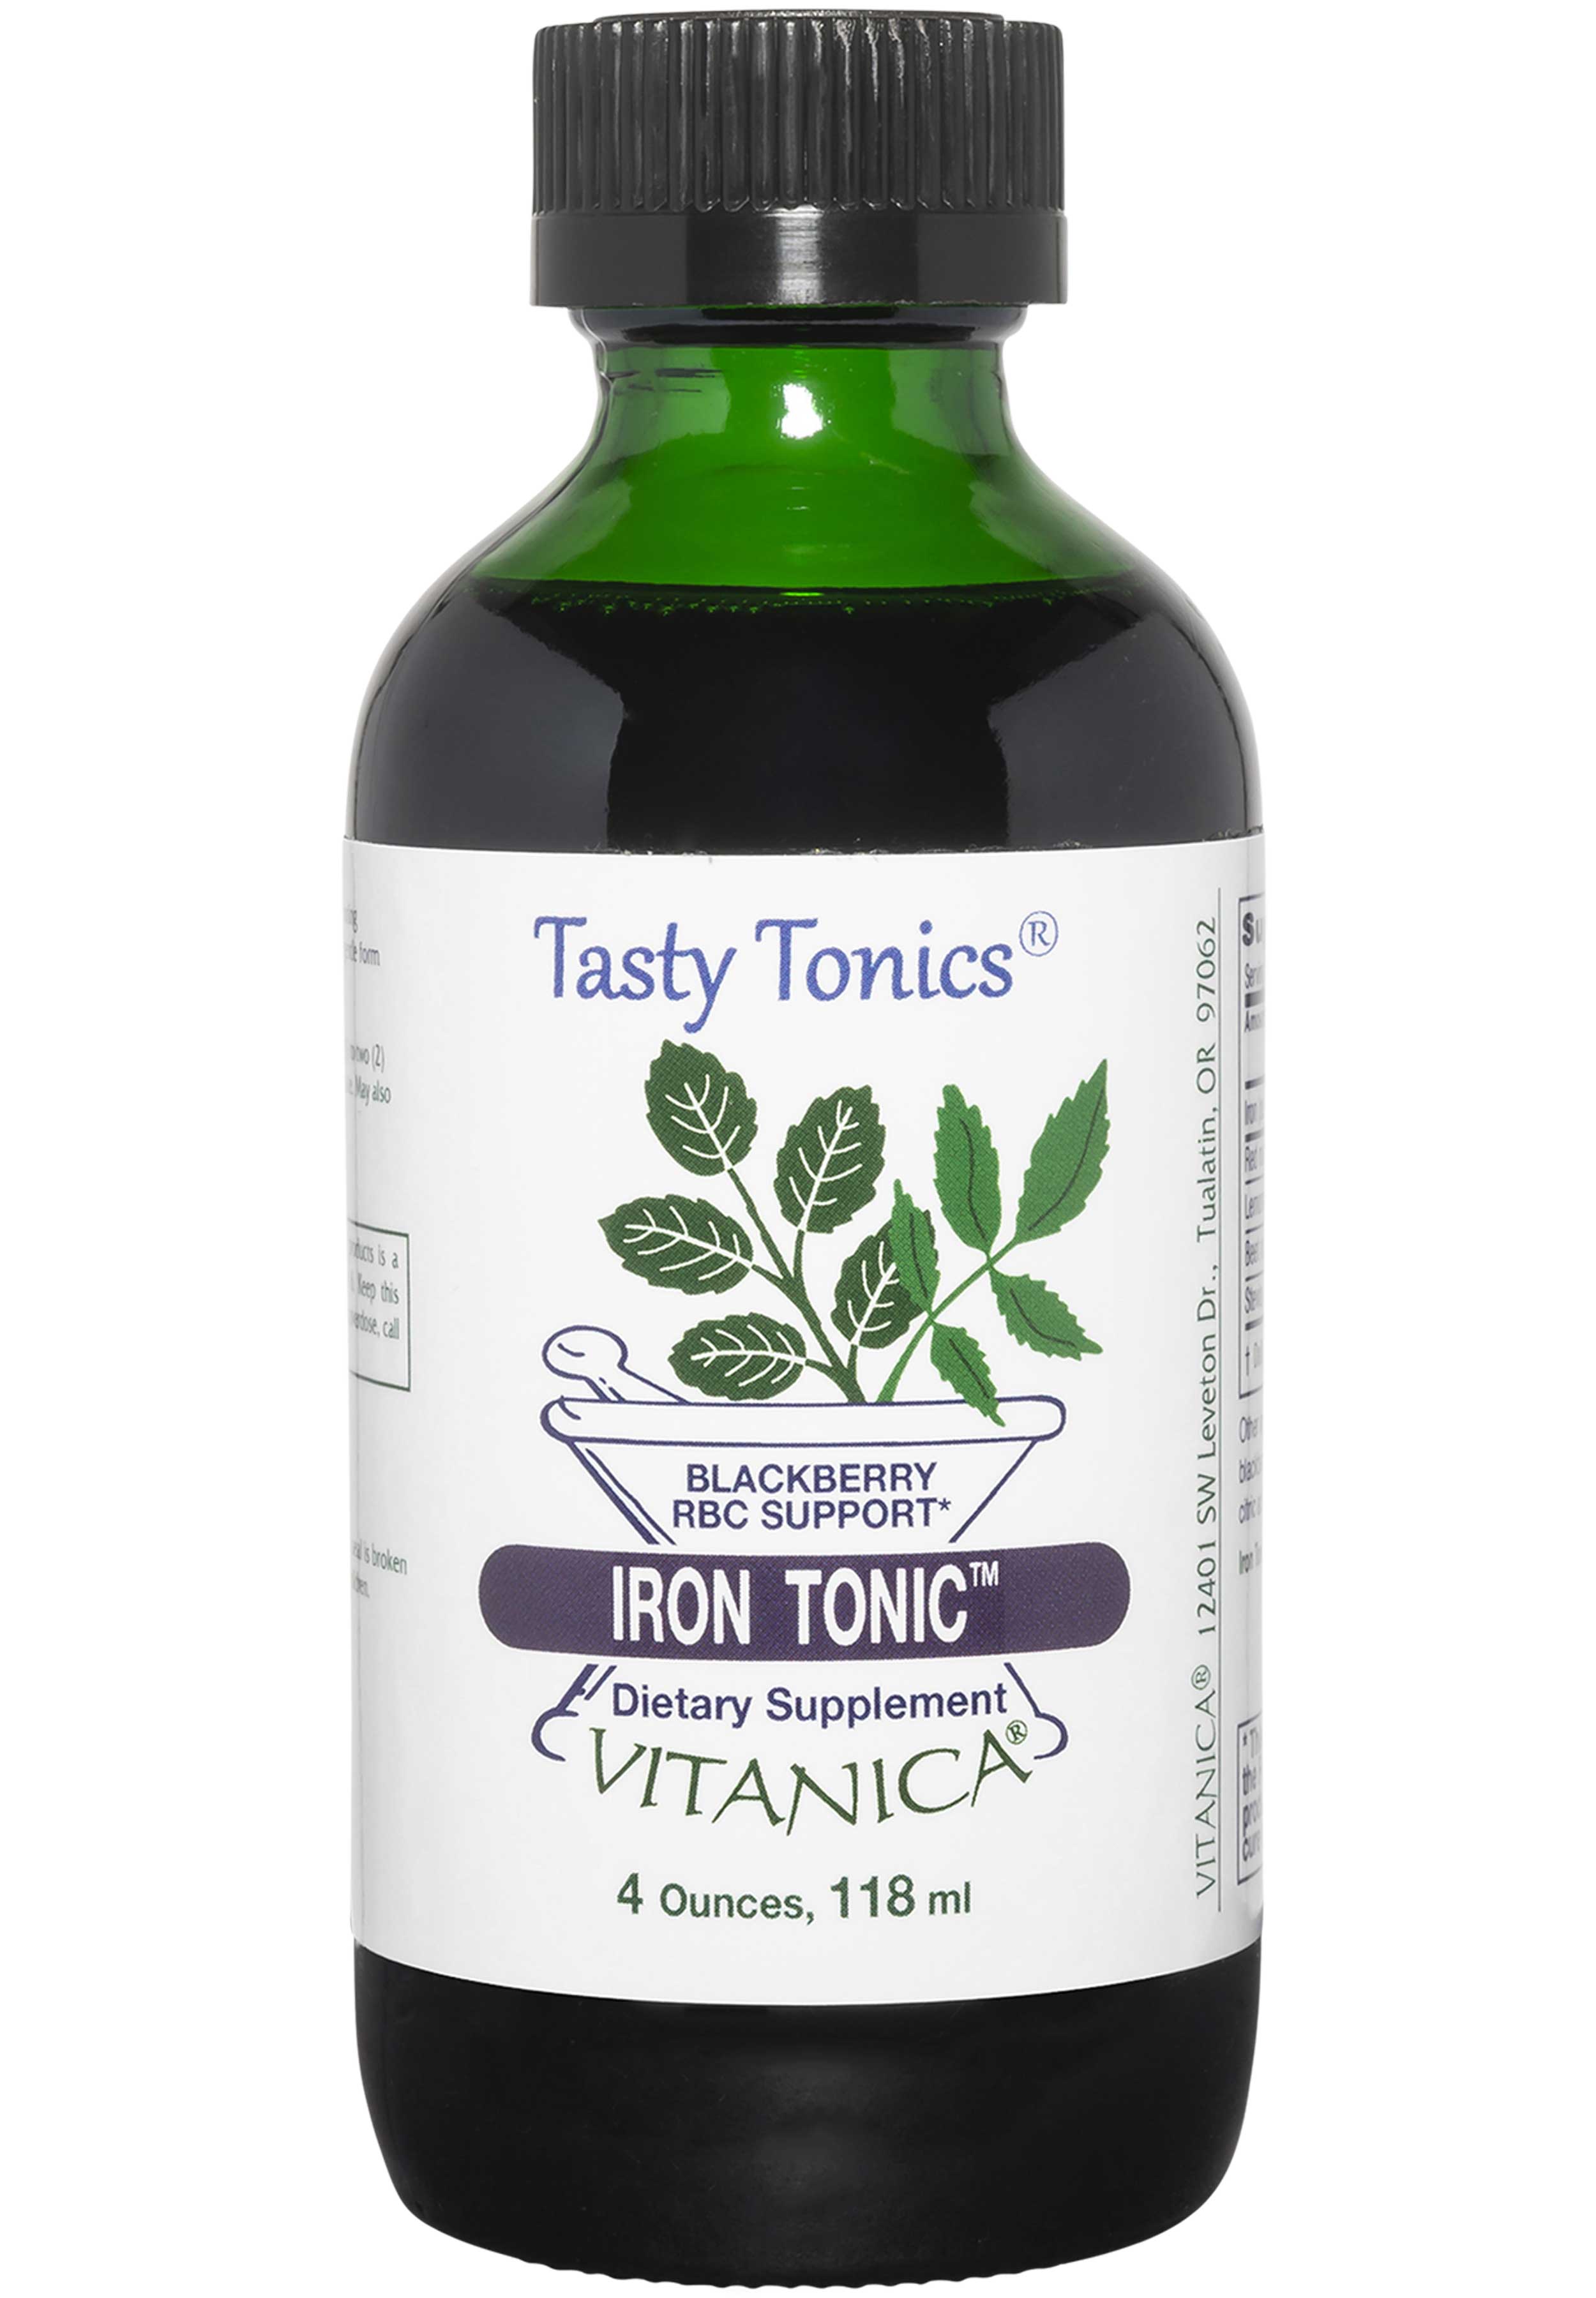 Vitanica Iron Tonic